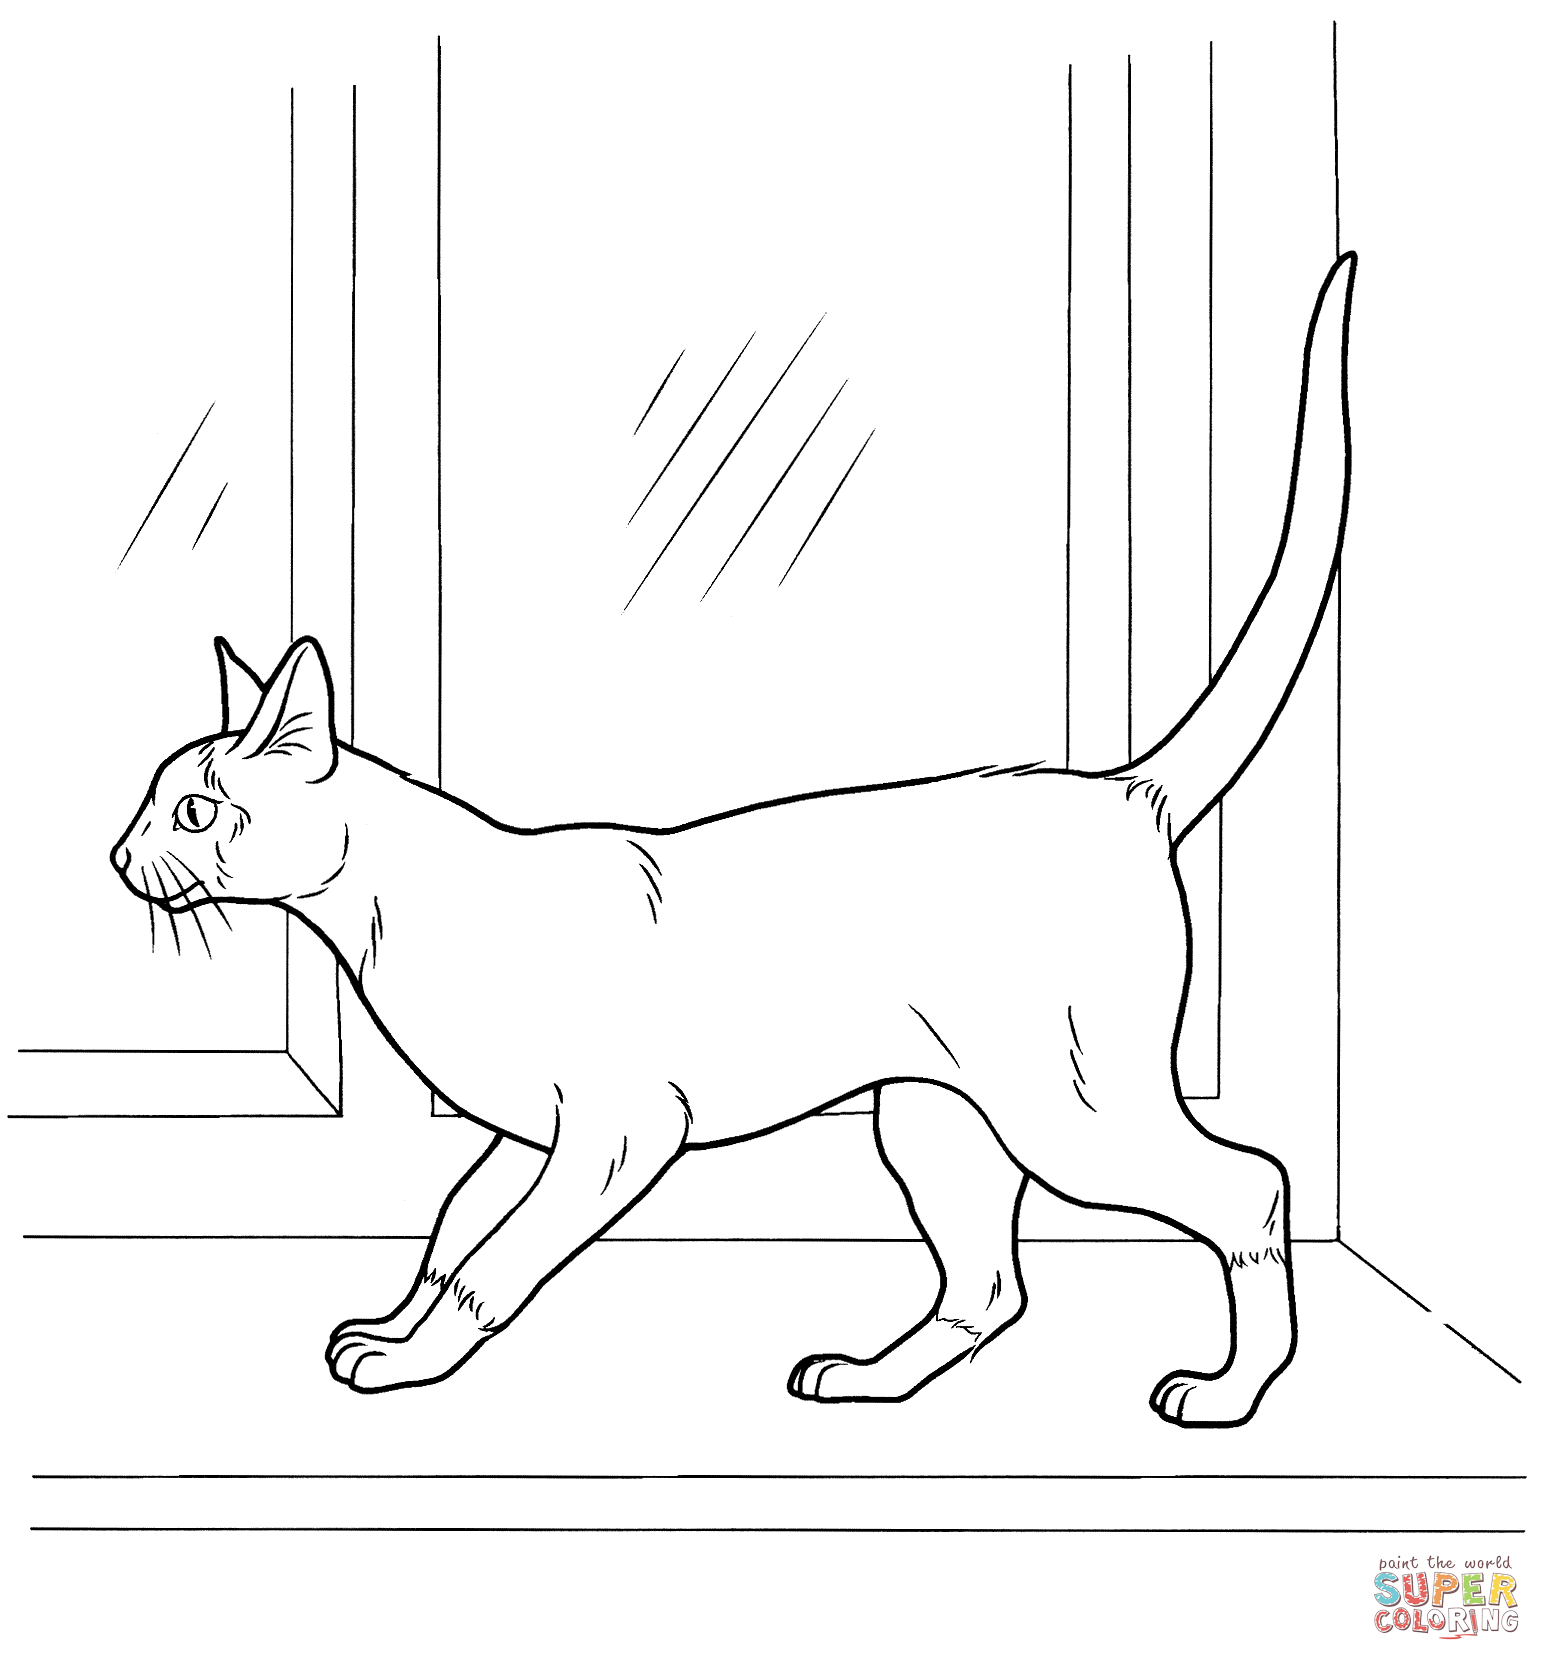 Siamese Cat coloring #20, Download drawings